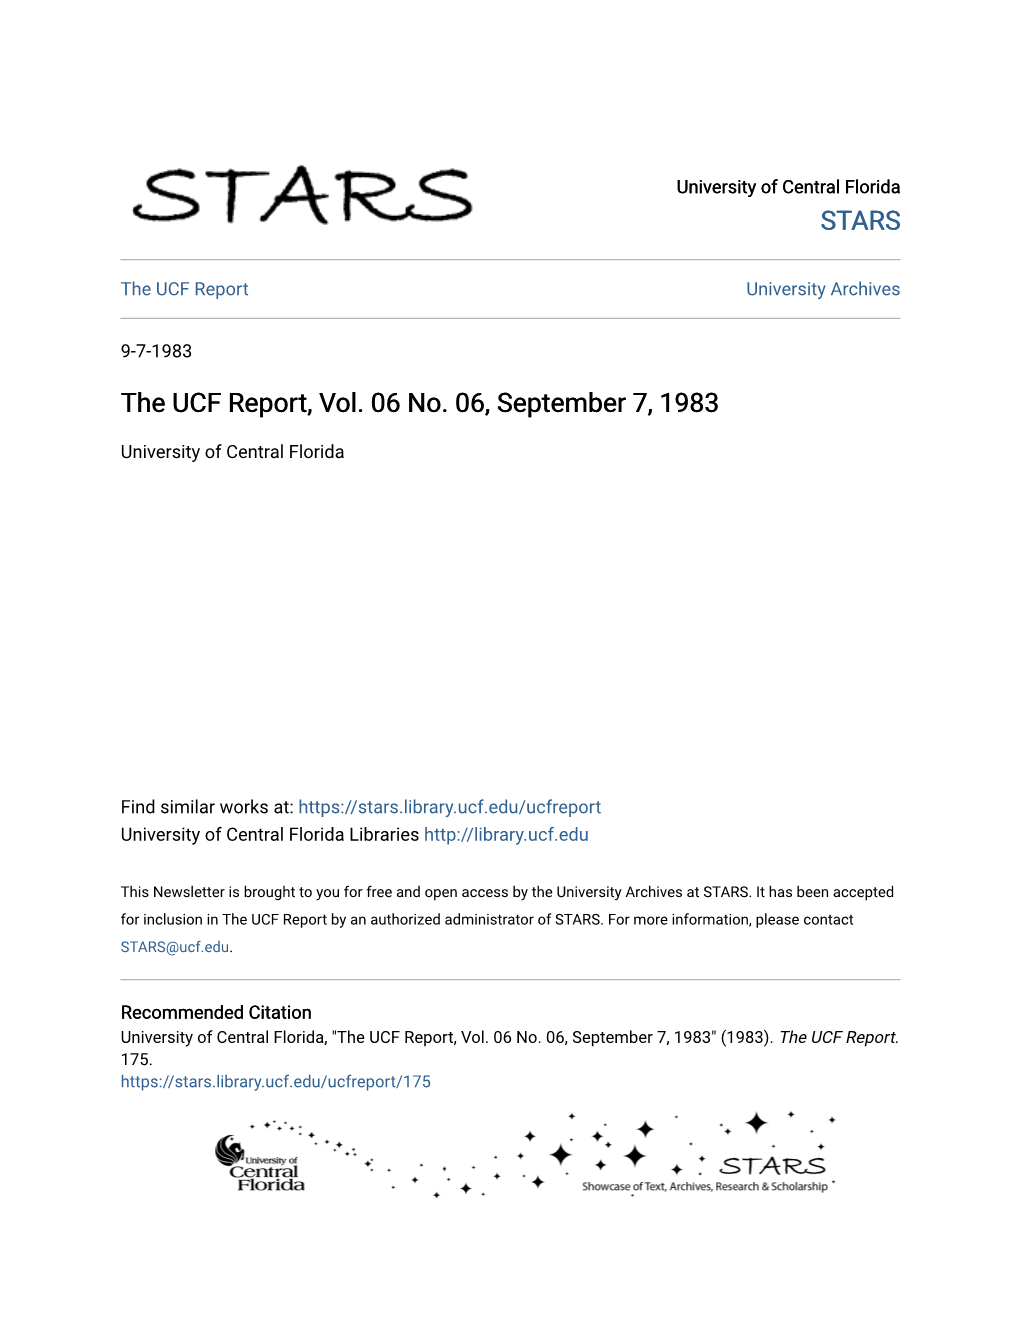 The UCF Report, Vol. 06 No. 06, September 7, 1983